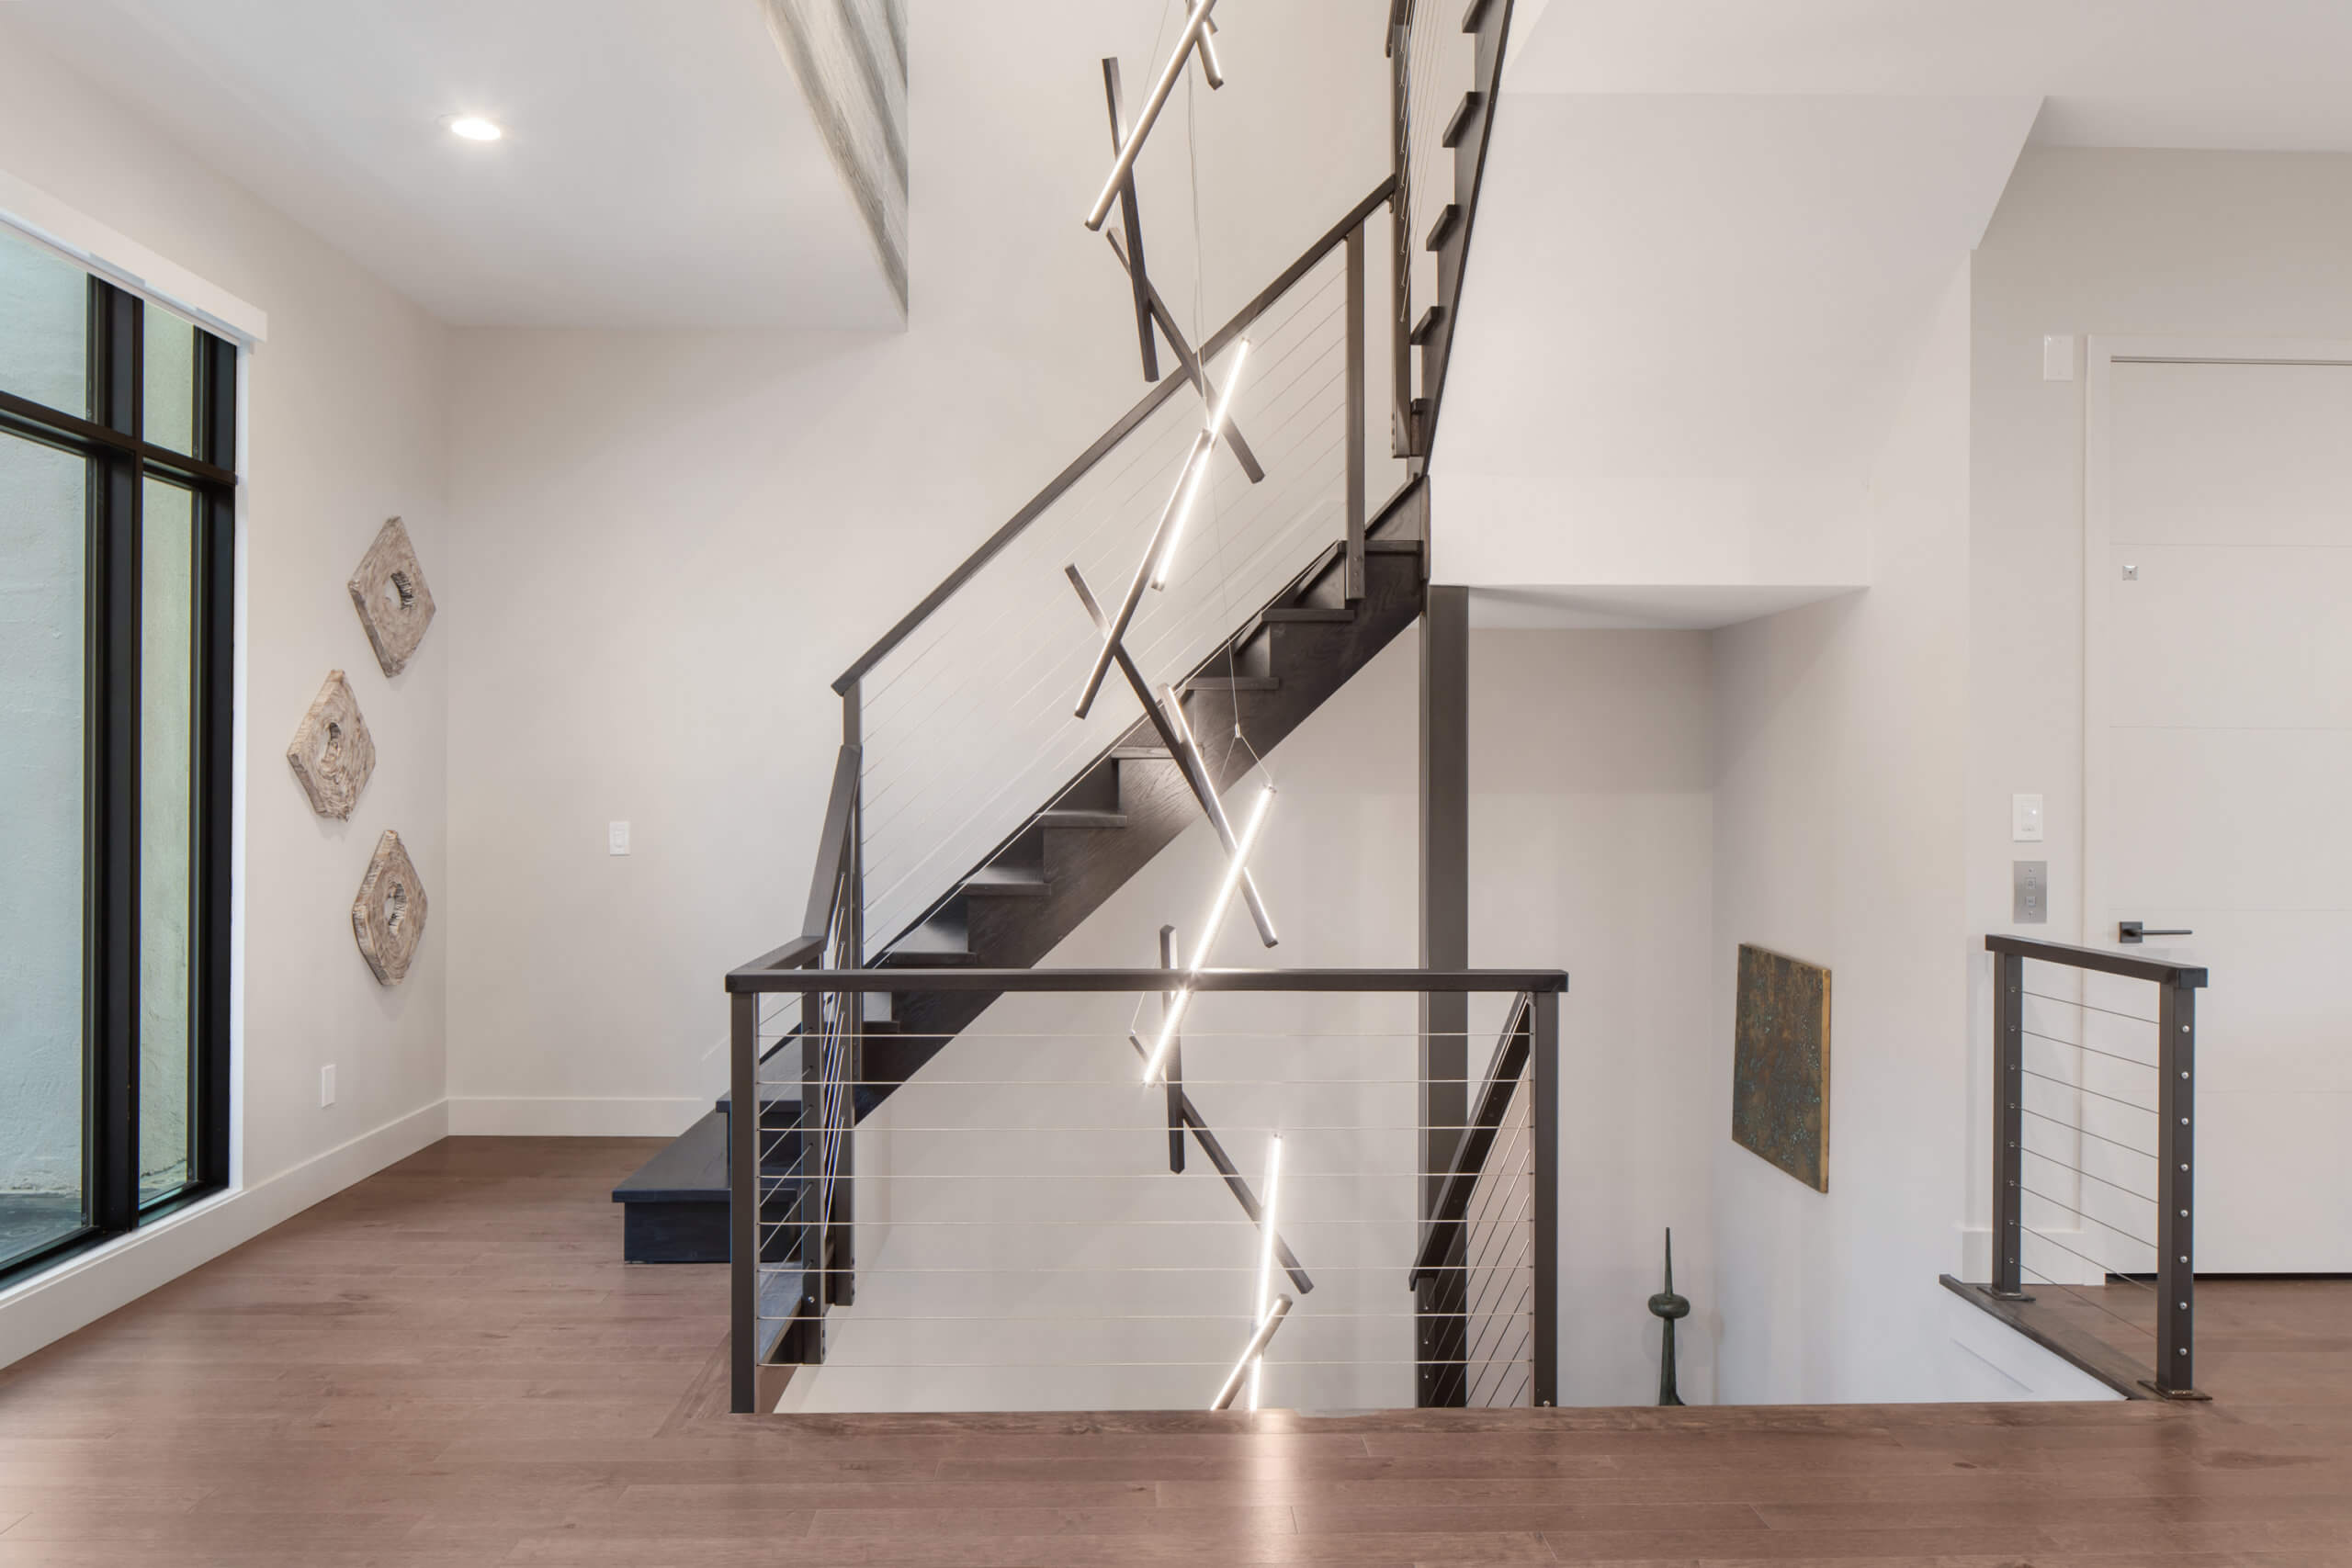 Open stairway features a custom 3 story tall chandelier. Lighting design and interiors designed by Cincinnati's premiere contemporary interior designer, Renan Menninger.